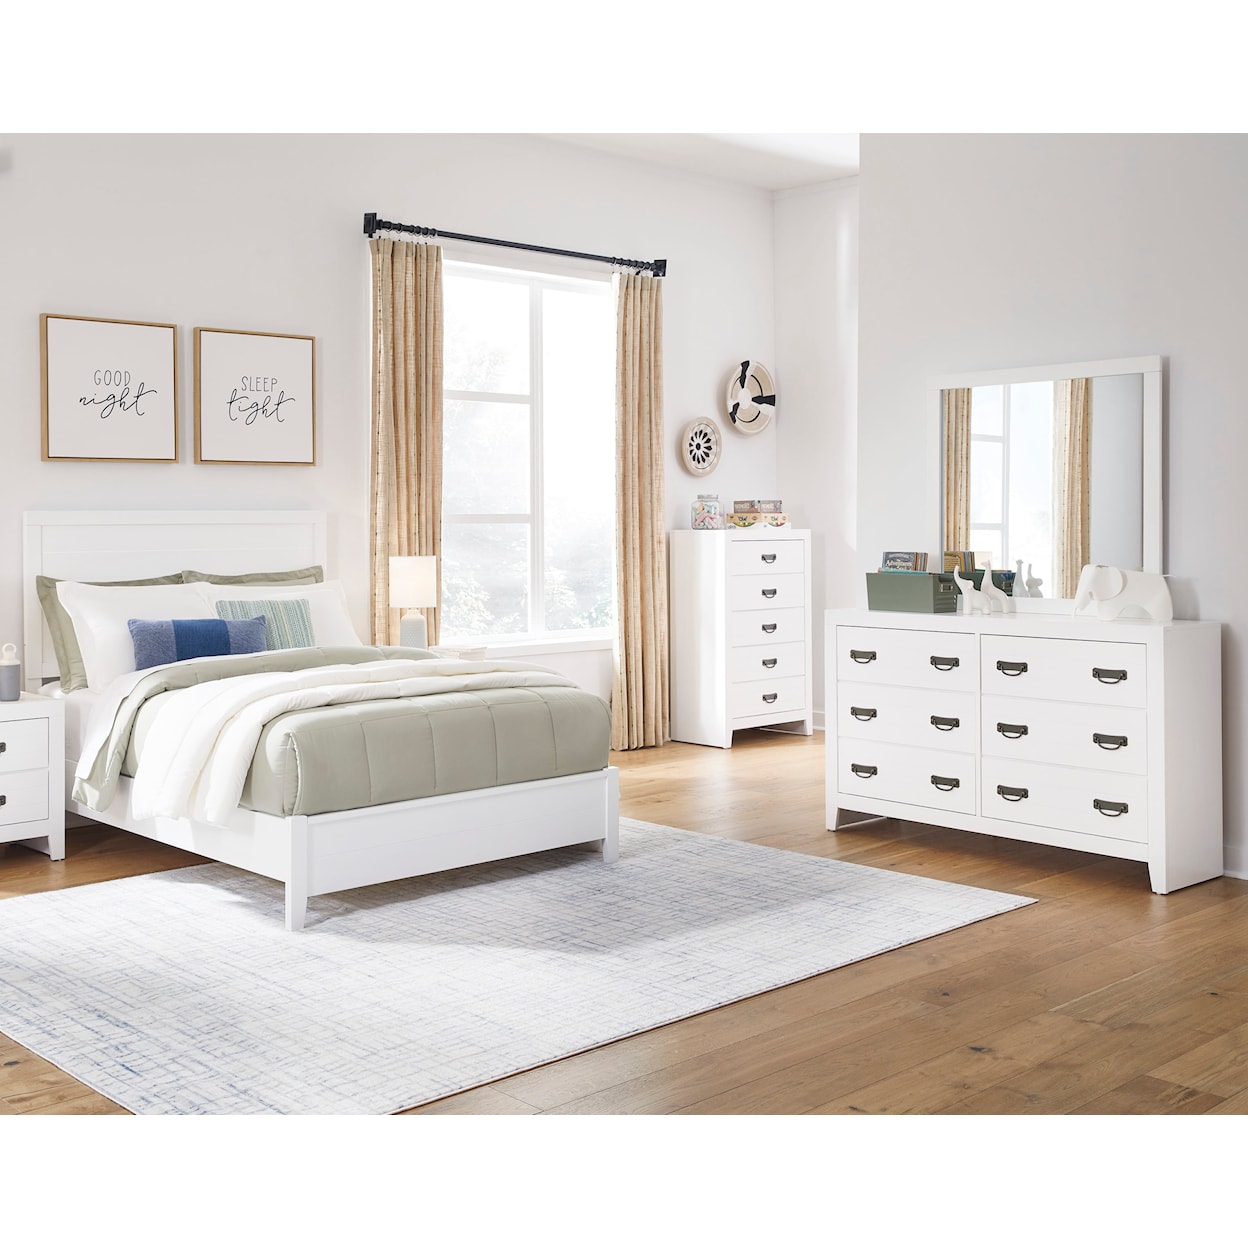 Signature Design by Ashley Furniture Binterglen Full Bedroom Set